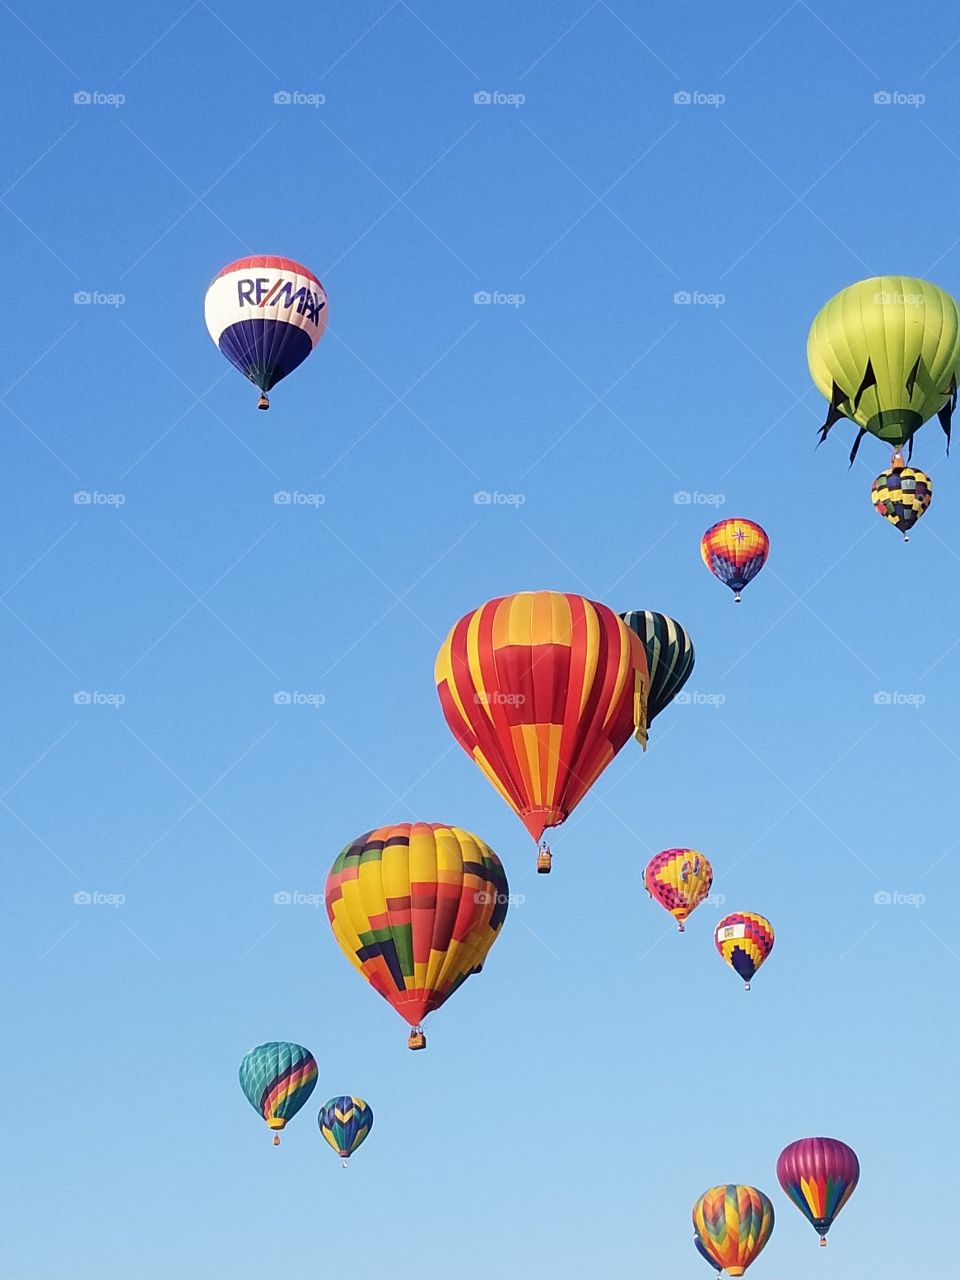 Hot air balloon races in Reno, NV